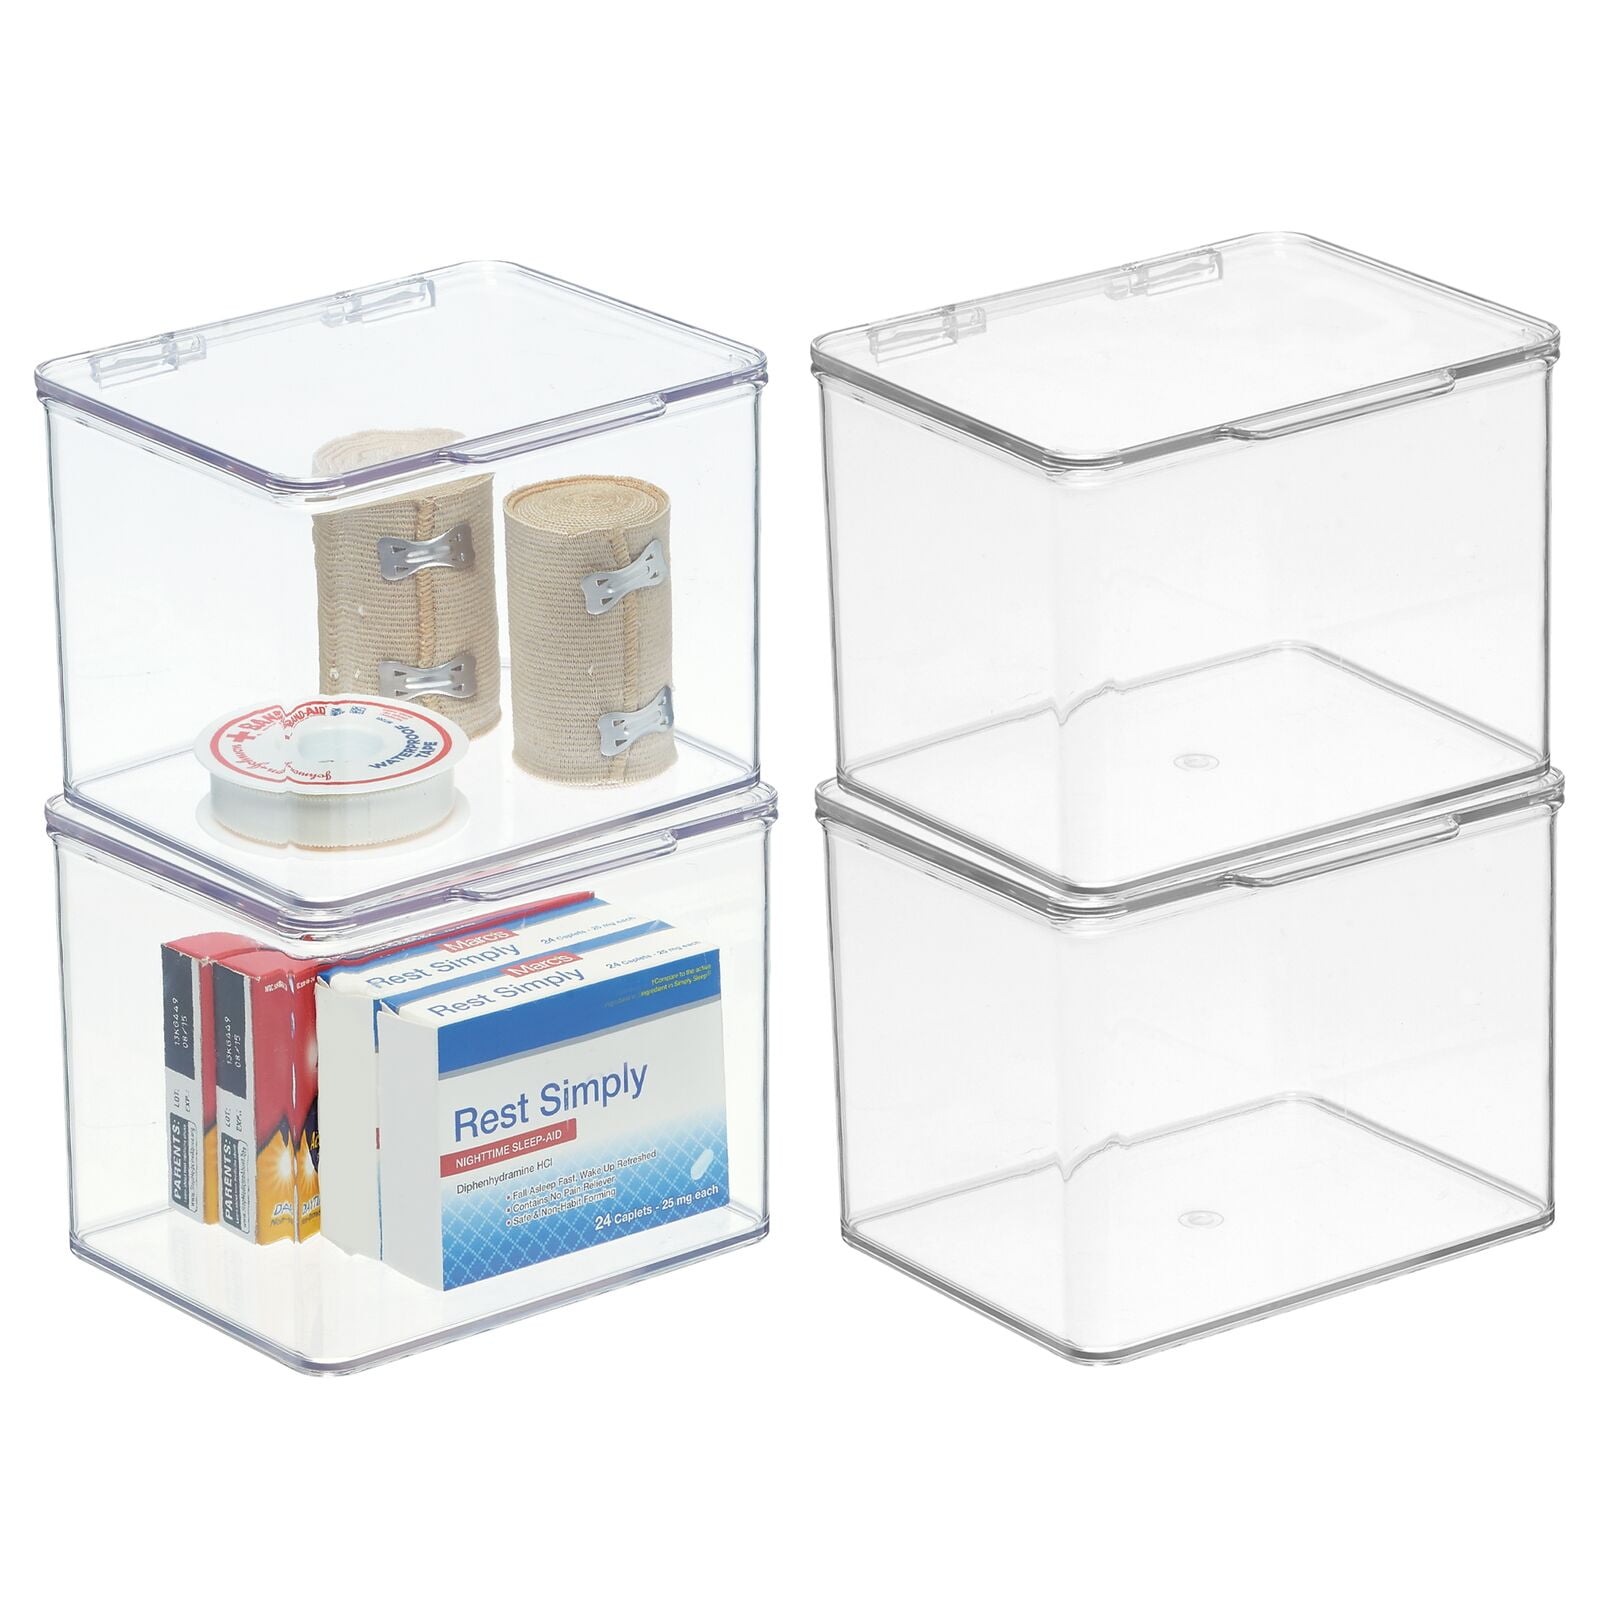  Dutiplus Medicine Cabinet Organizer 2-Tier Pull-and-Rotate Shelf  Storage Rack Organizer for Holding Prescription Bottles, Cosmetics 11 H x  4 W x 11.22 L : Home & Kitchen